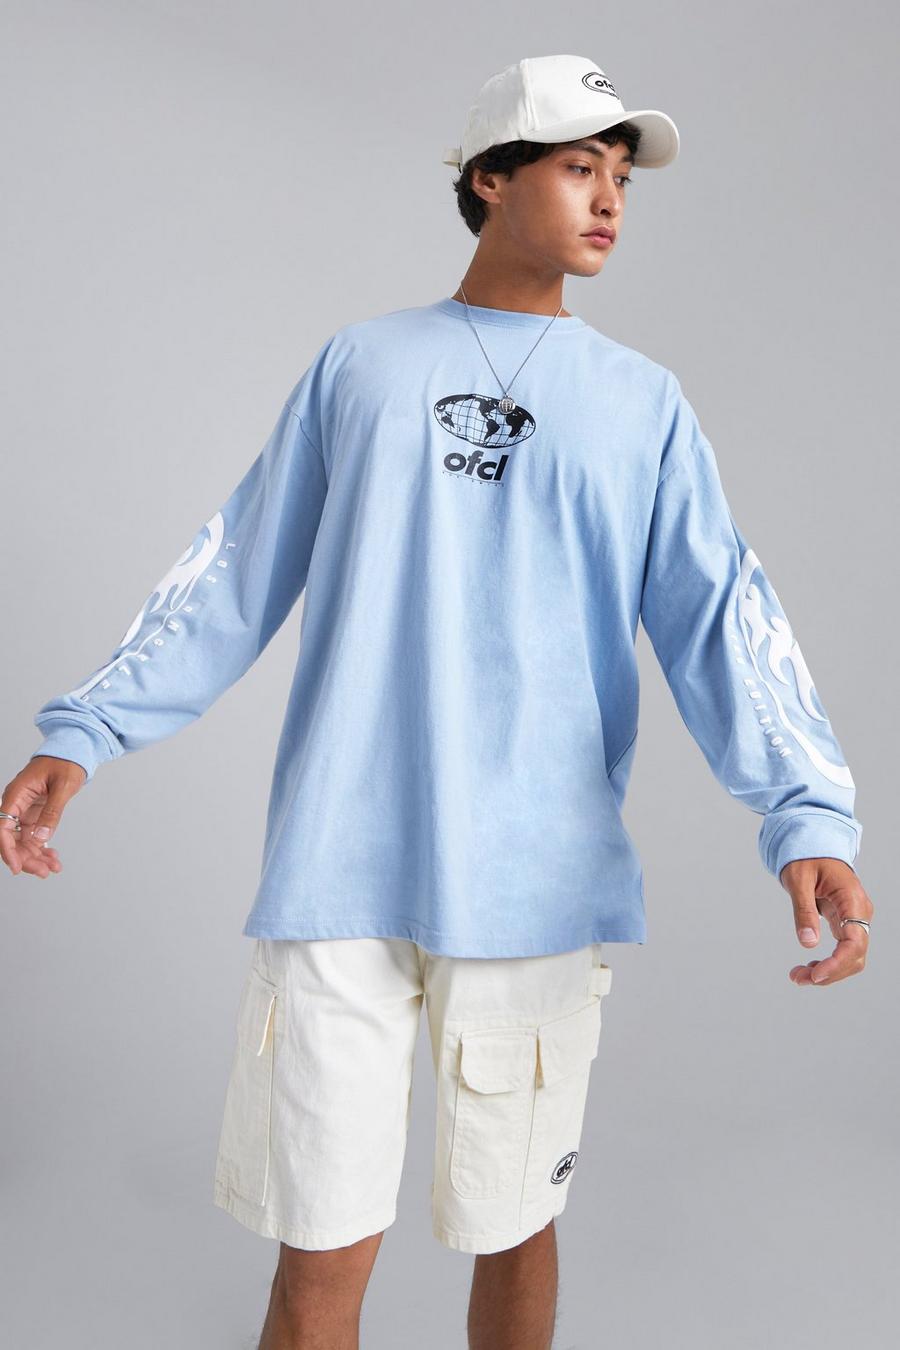 Camiseta oversize de manga larga con estampado gráfico Ofcl, Light blue azzurro